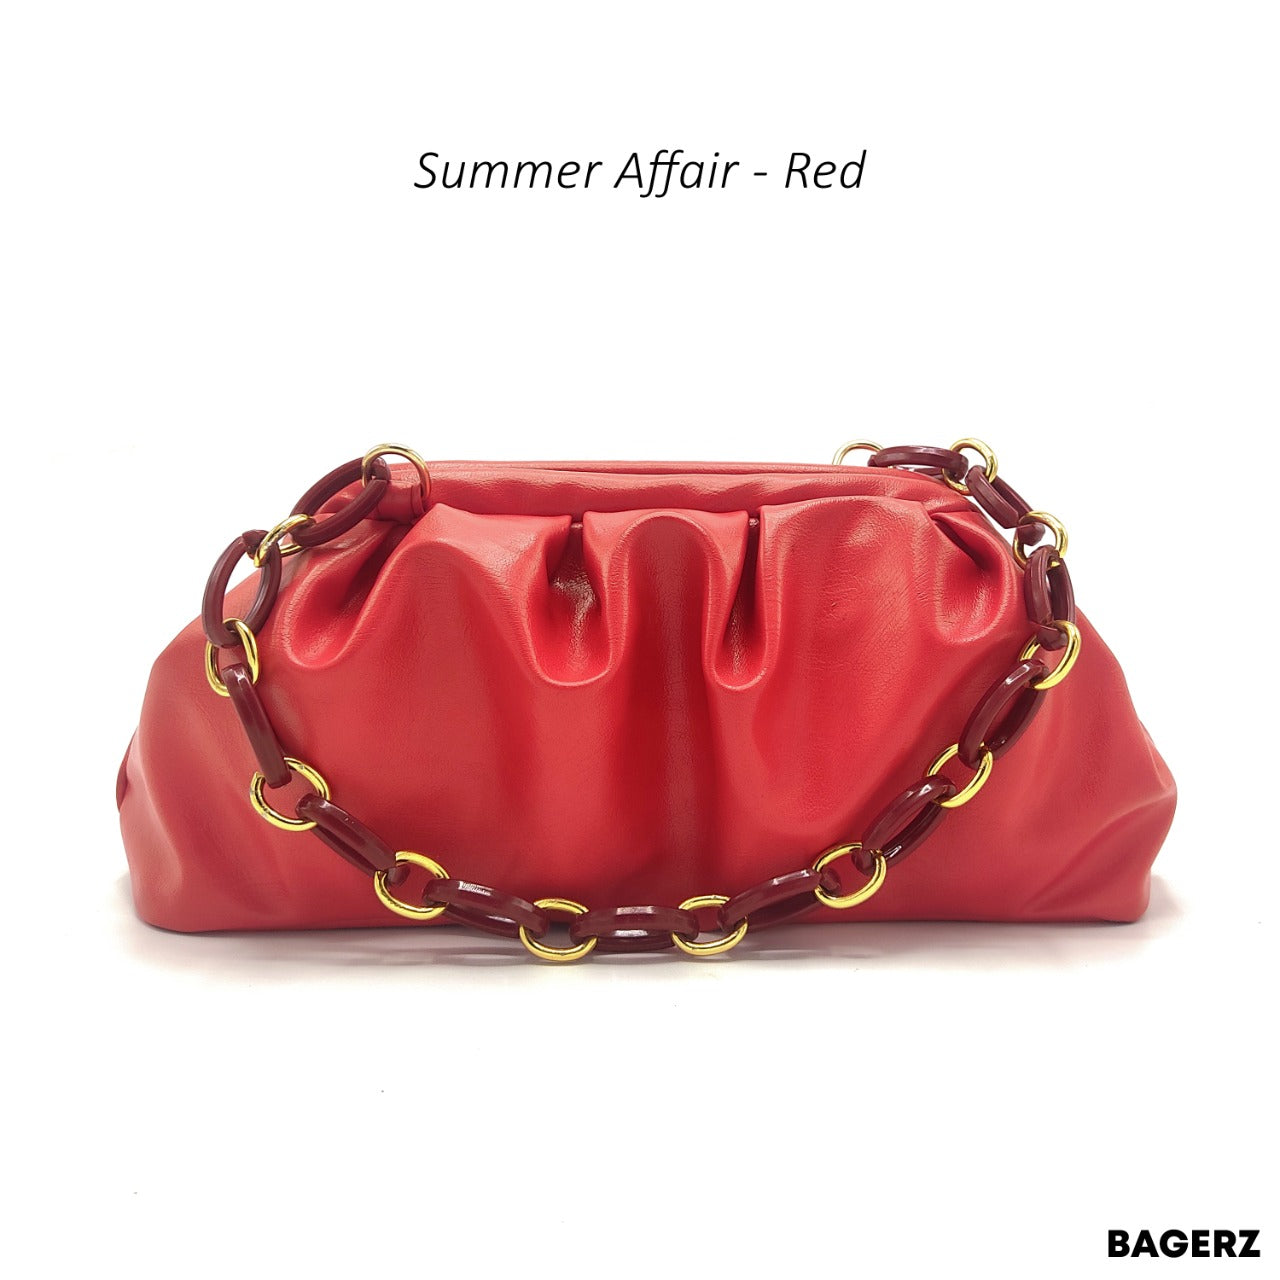 Summer Affair - Red